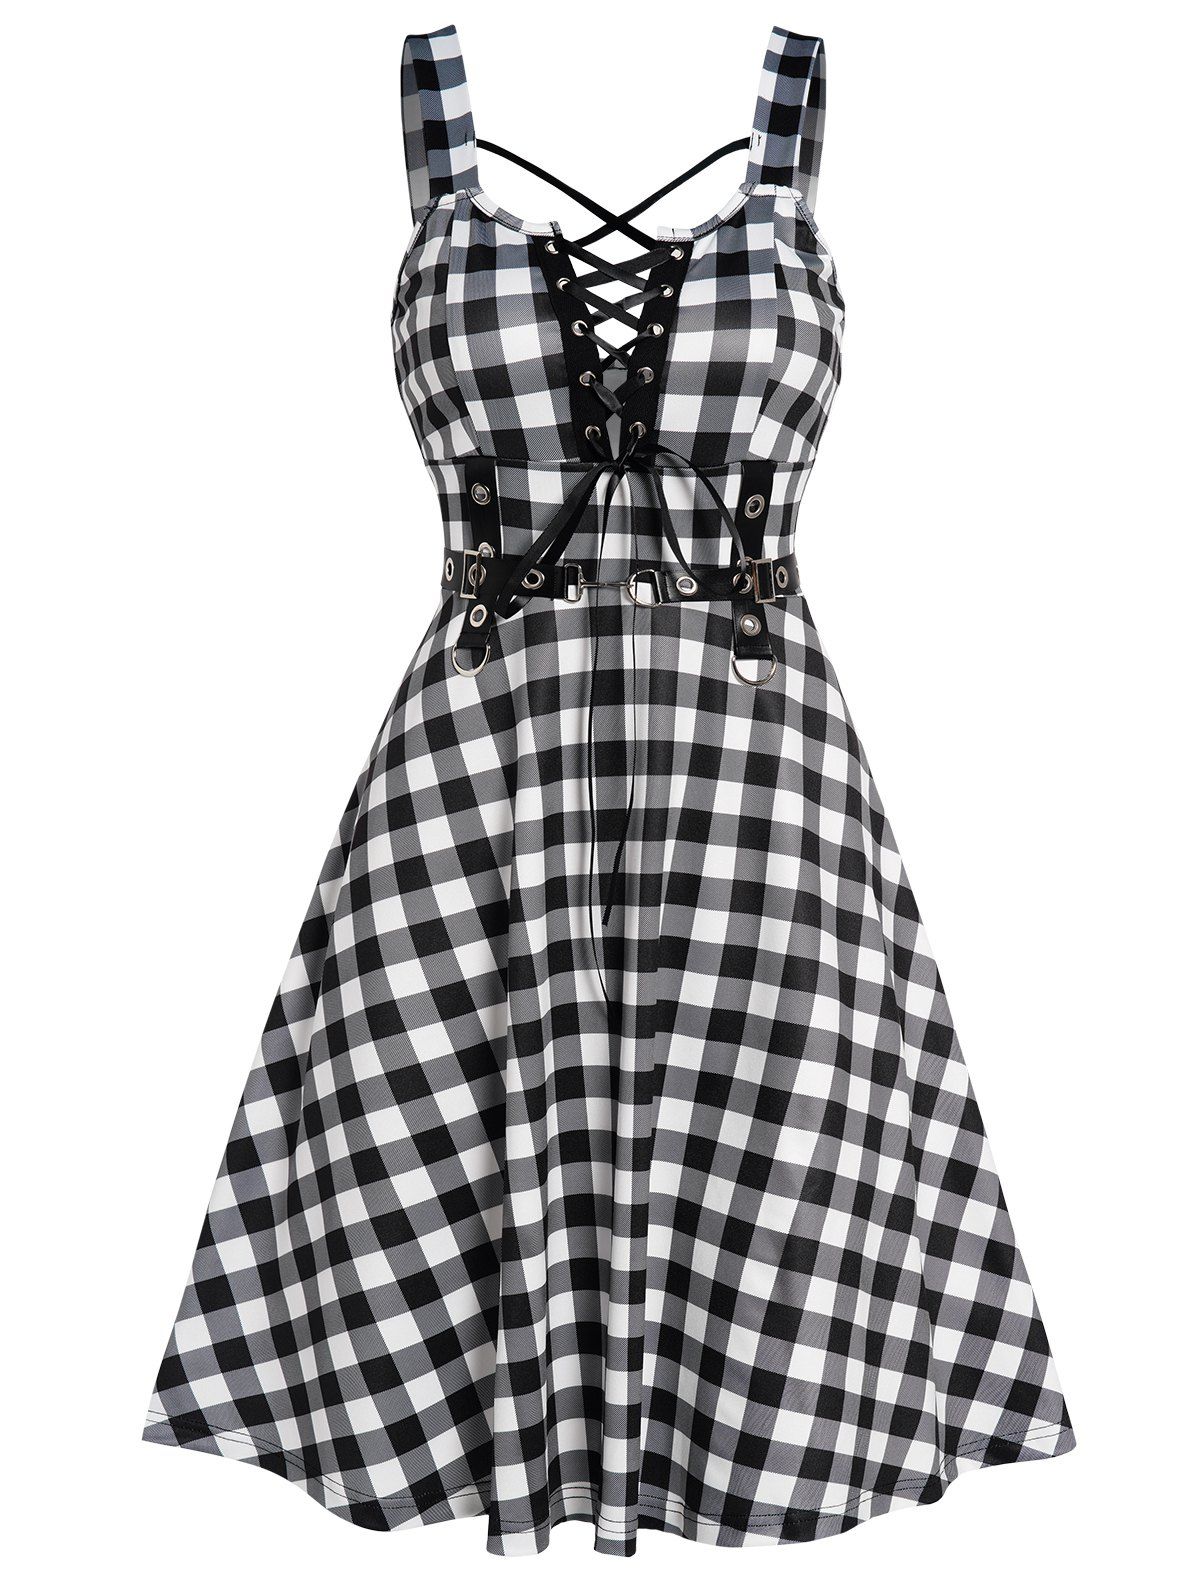 Plaid Print Dress Crisscross Lace Up Grommet High Waisted Sleeveless A Line Mini Dress - BLACK XXL